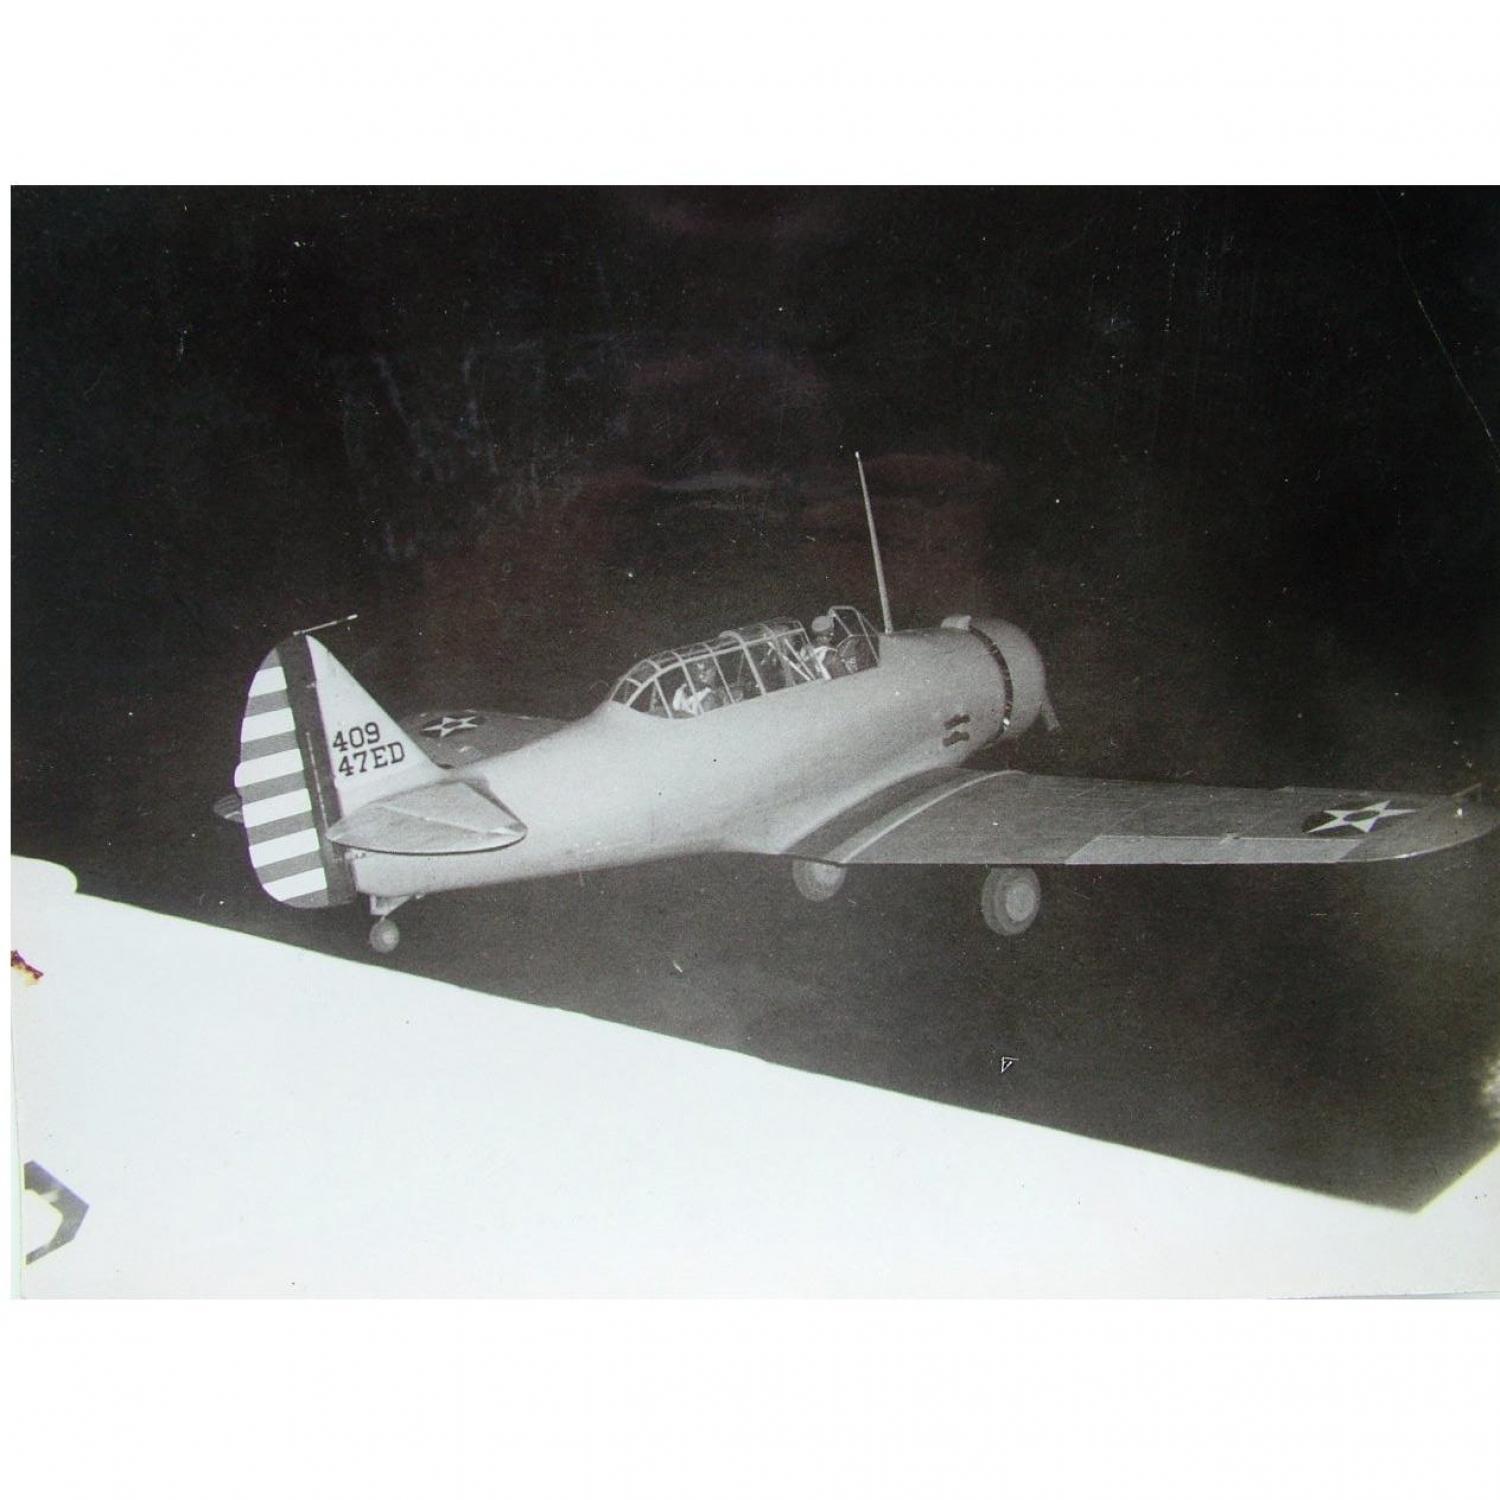 Press Photo - USAAF Night Fighter